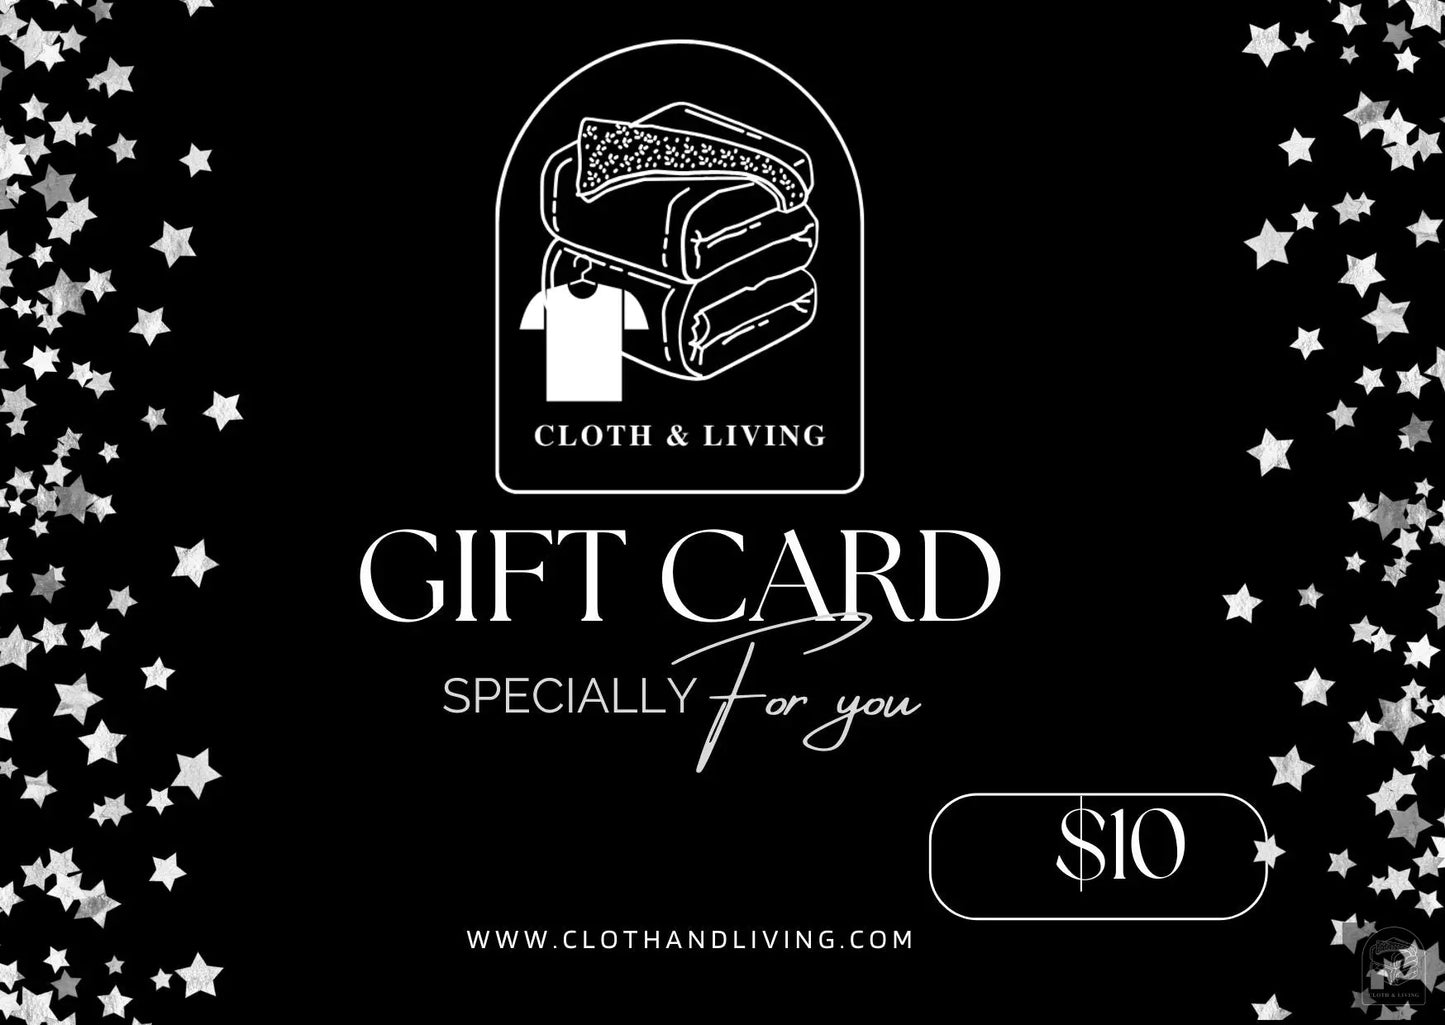 Cloth & Living Gift Card - Cloth & Living